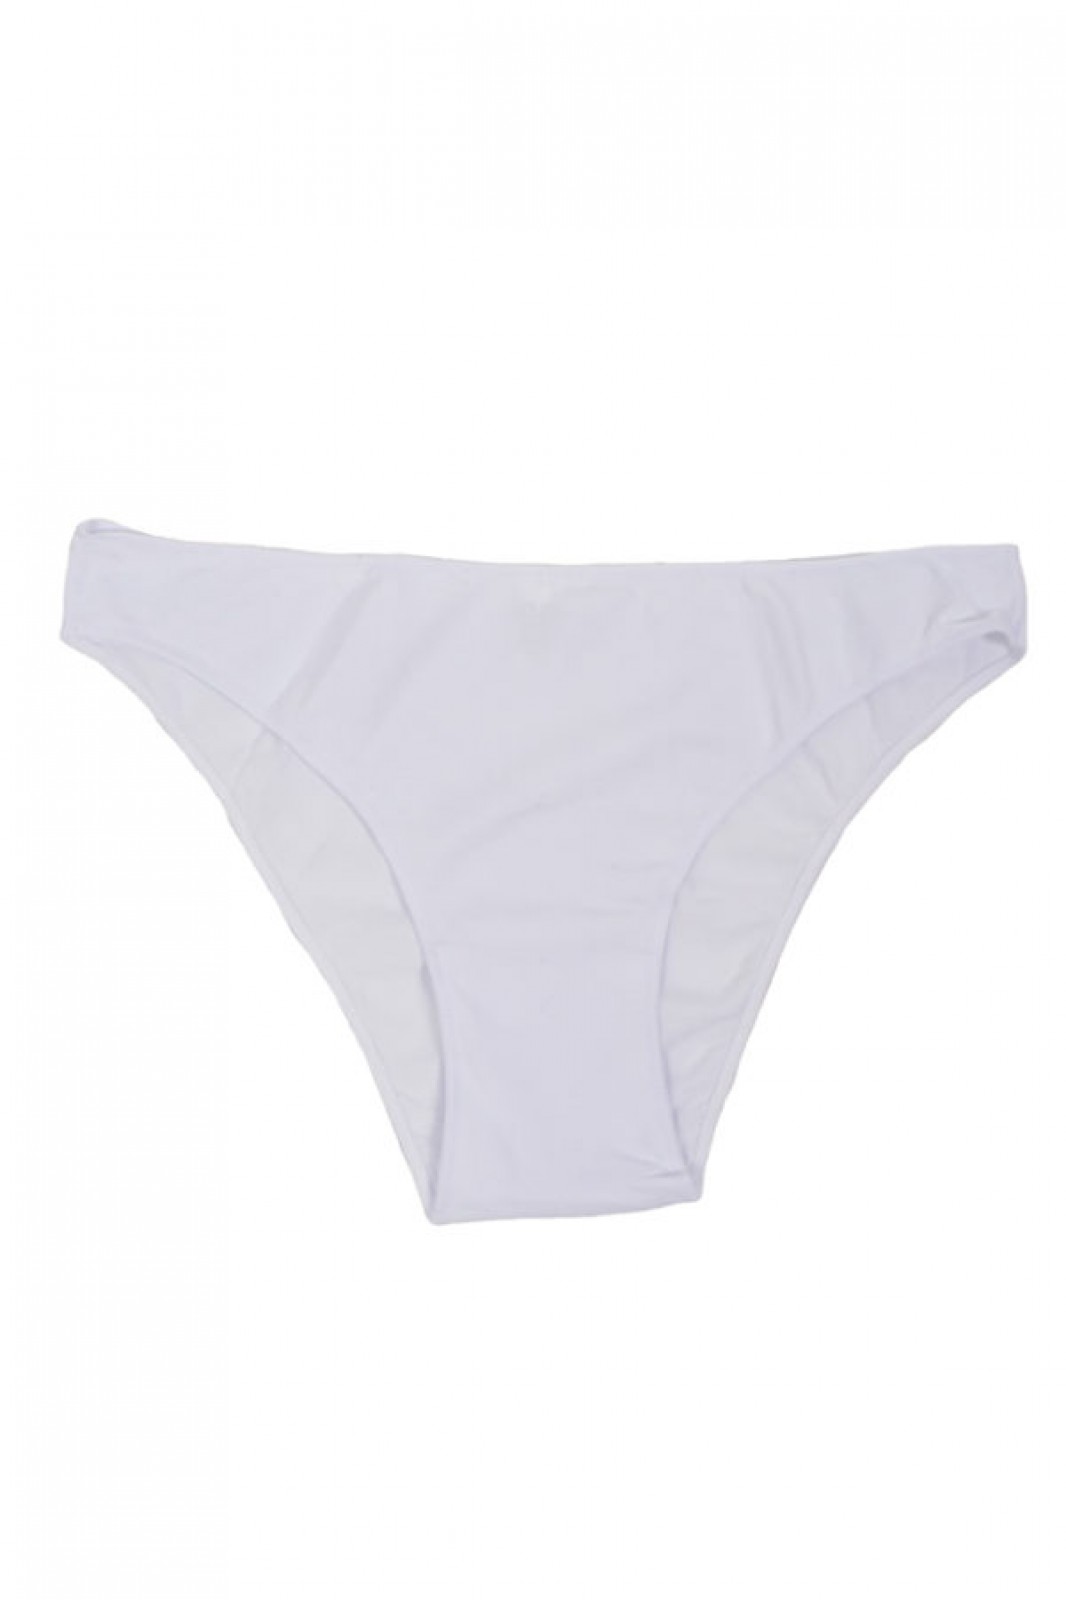 INVISI Cotton panties Monochrome (6 Pack)